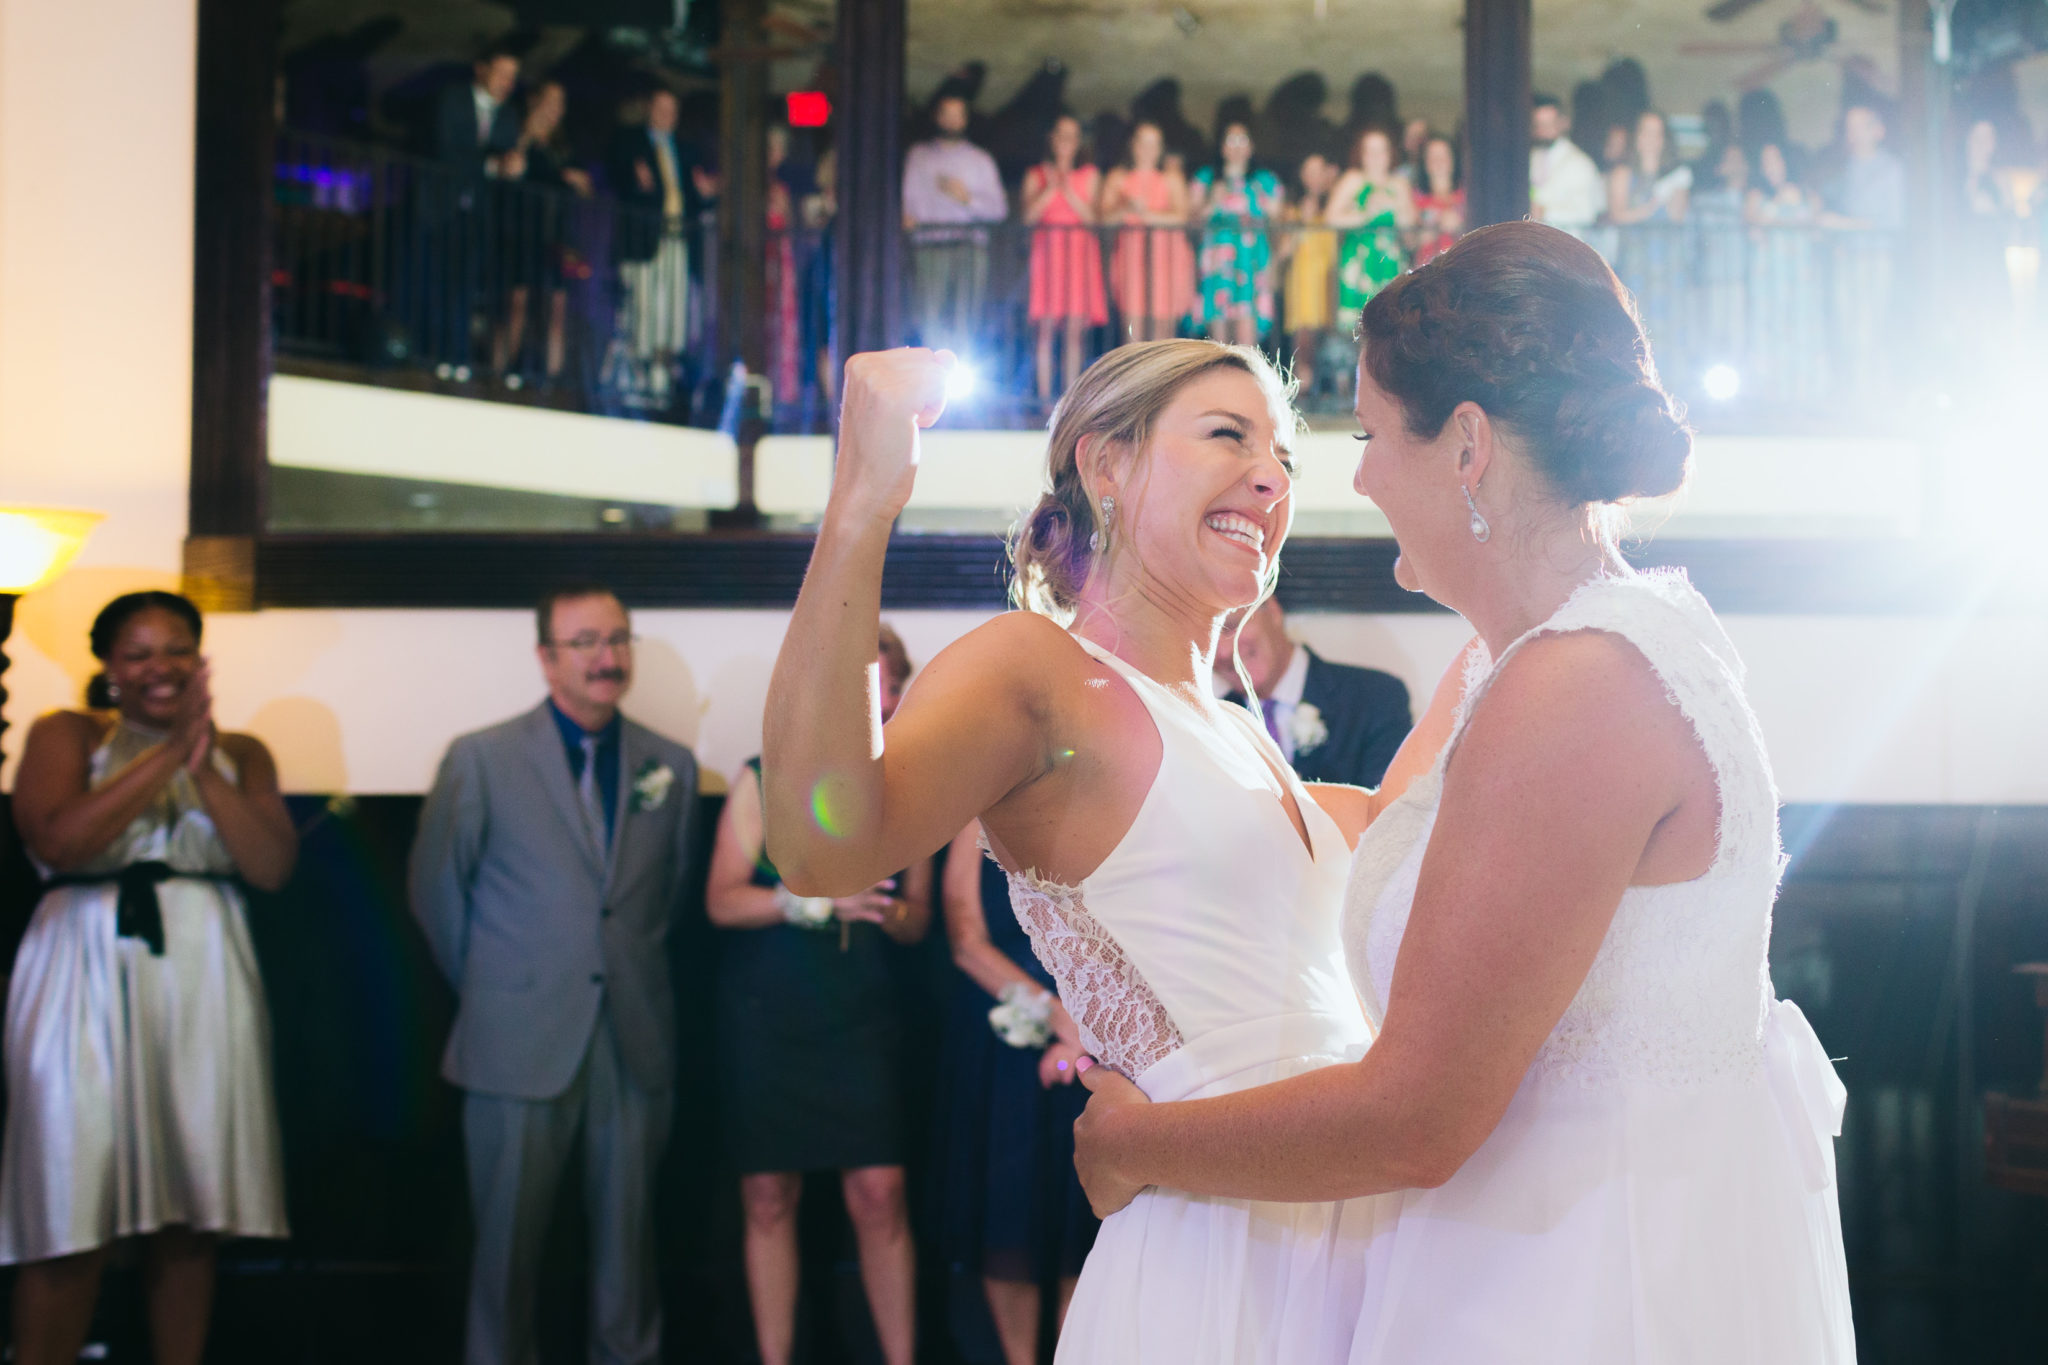 Two women dance during their wedding reception.